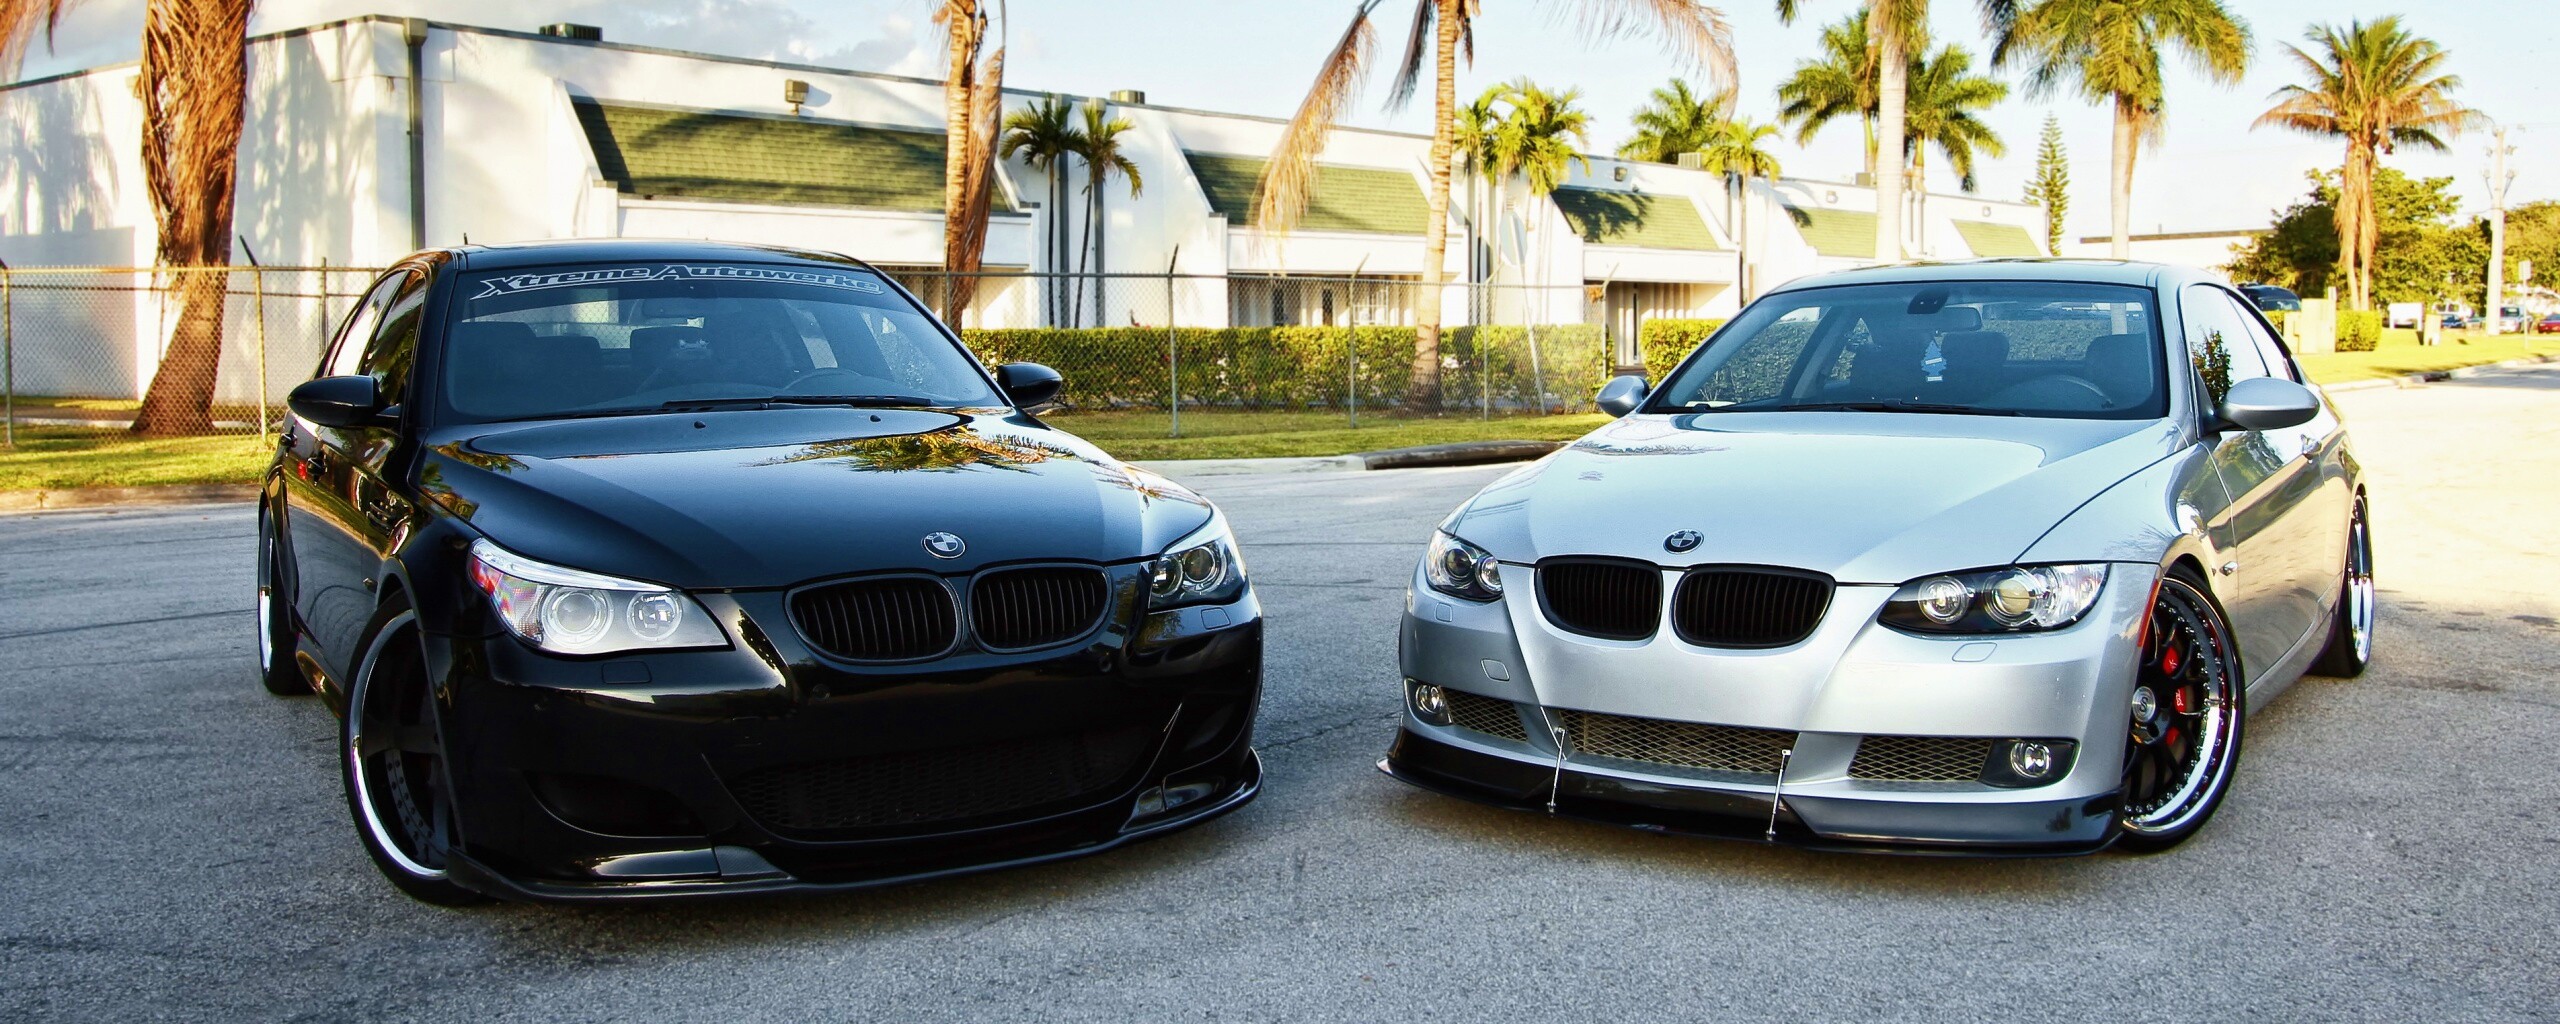 3 2 м5. BMW e60. БМВ м5 е60. Две БМВ е60. BMW m5 e60.